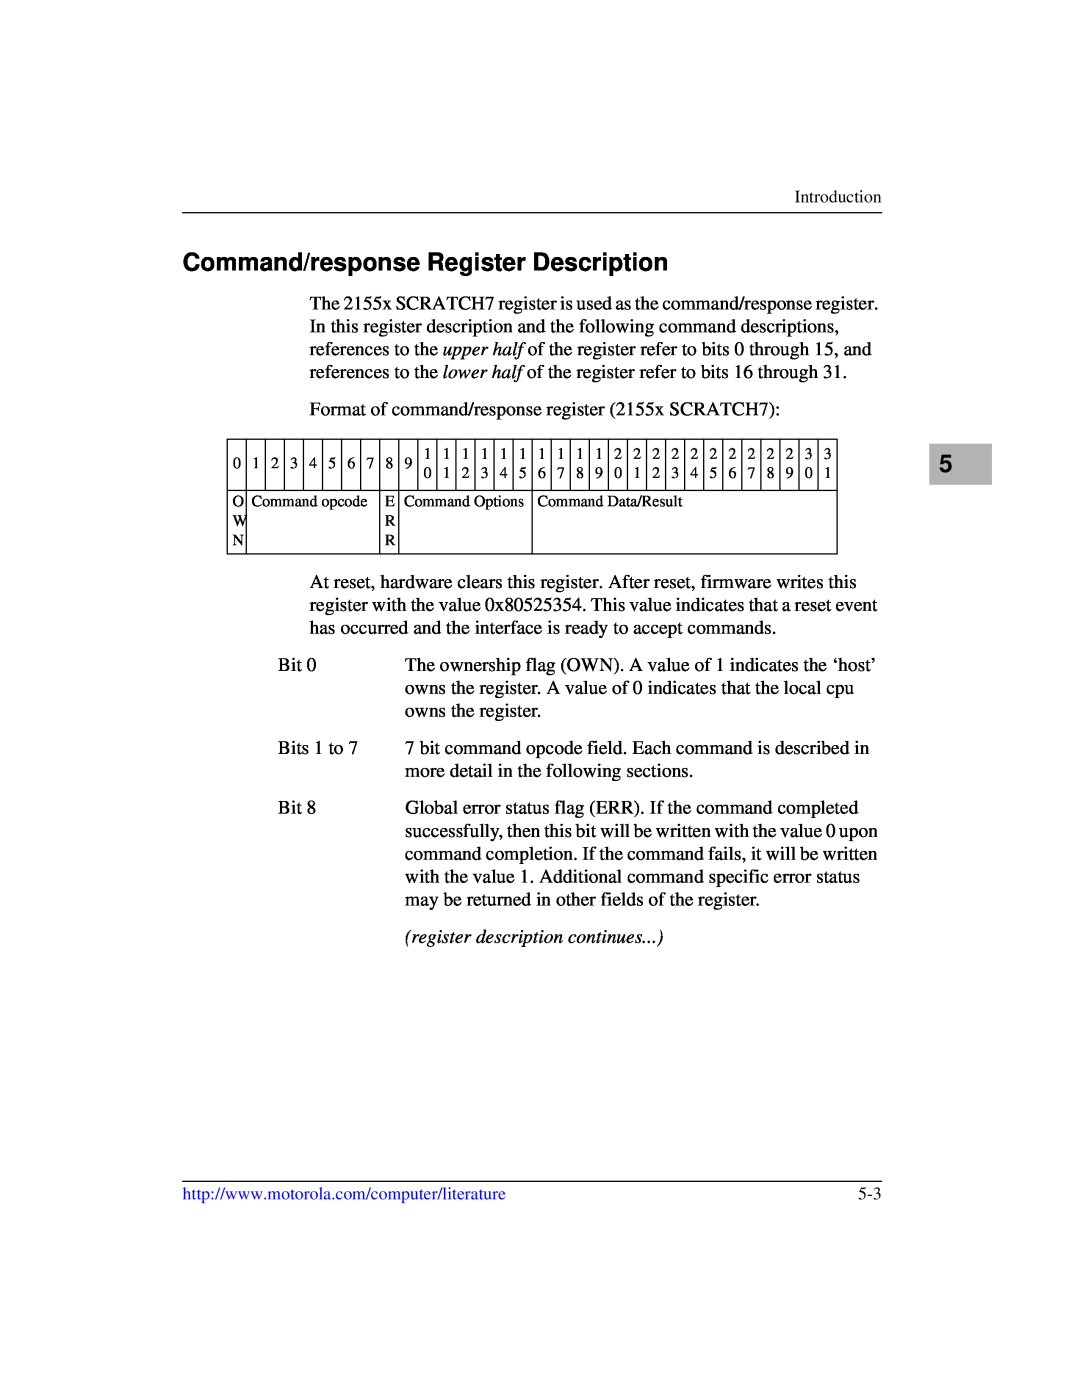 Motorola IH5, MCPN750A manual Command/response Register Description, register description continues 